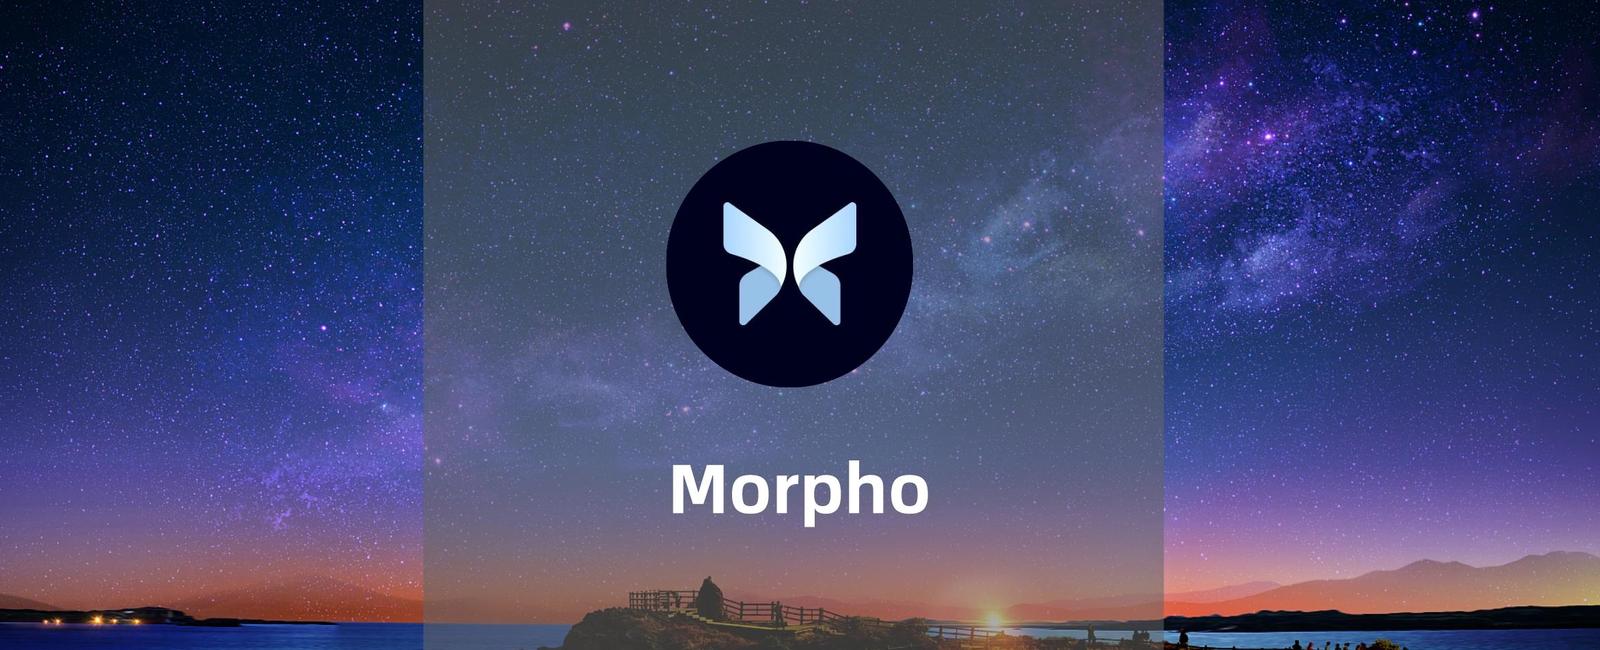 Morpho-通过P2P借贷的形式提高你的收益率